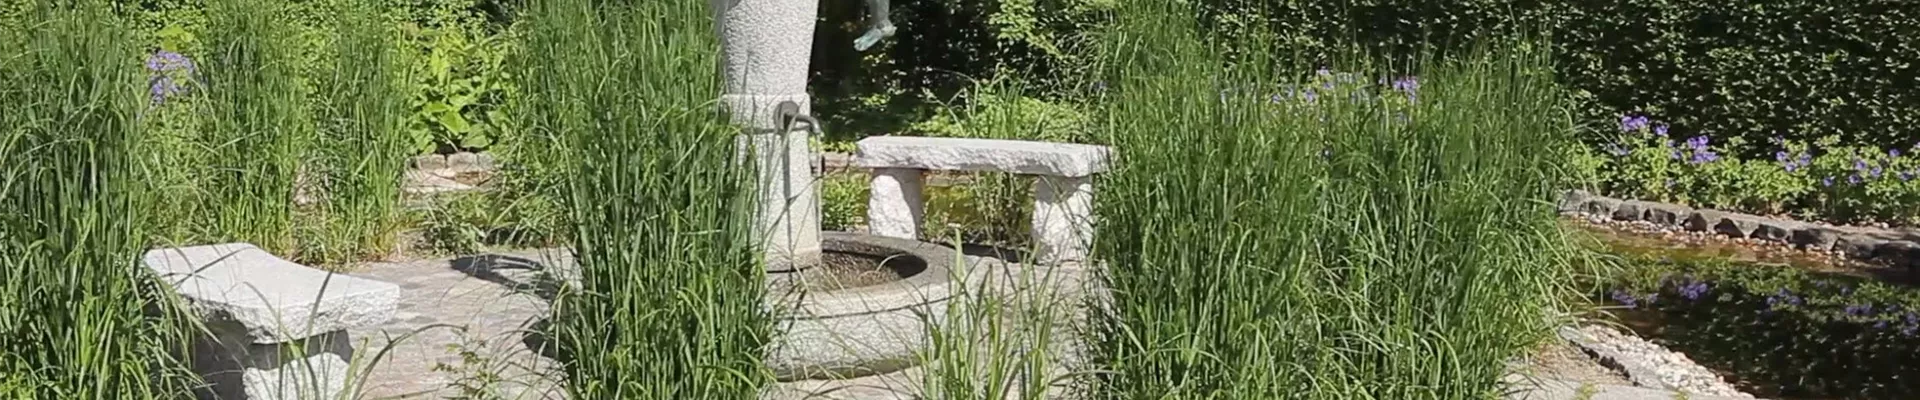 Gartengestaltung - Wasser- und Skulpturengarten (thumbnail)